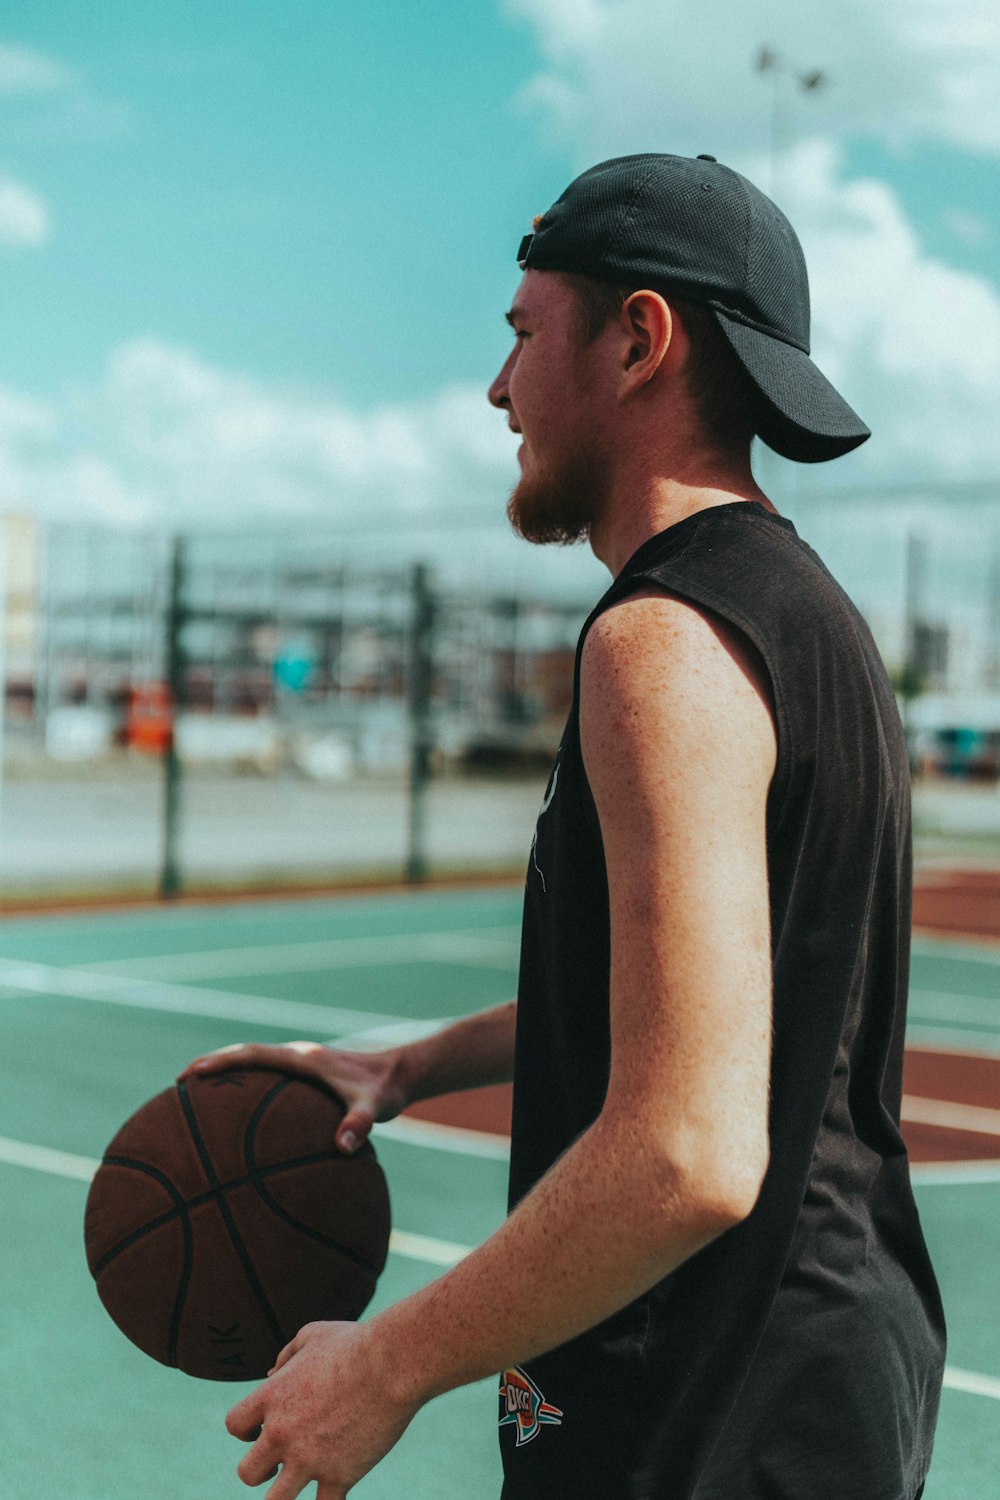 a man holding a basketball on a basketball court